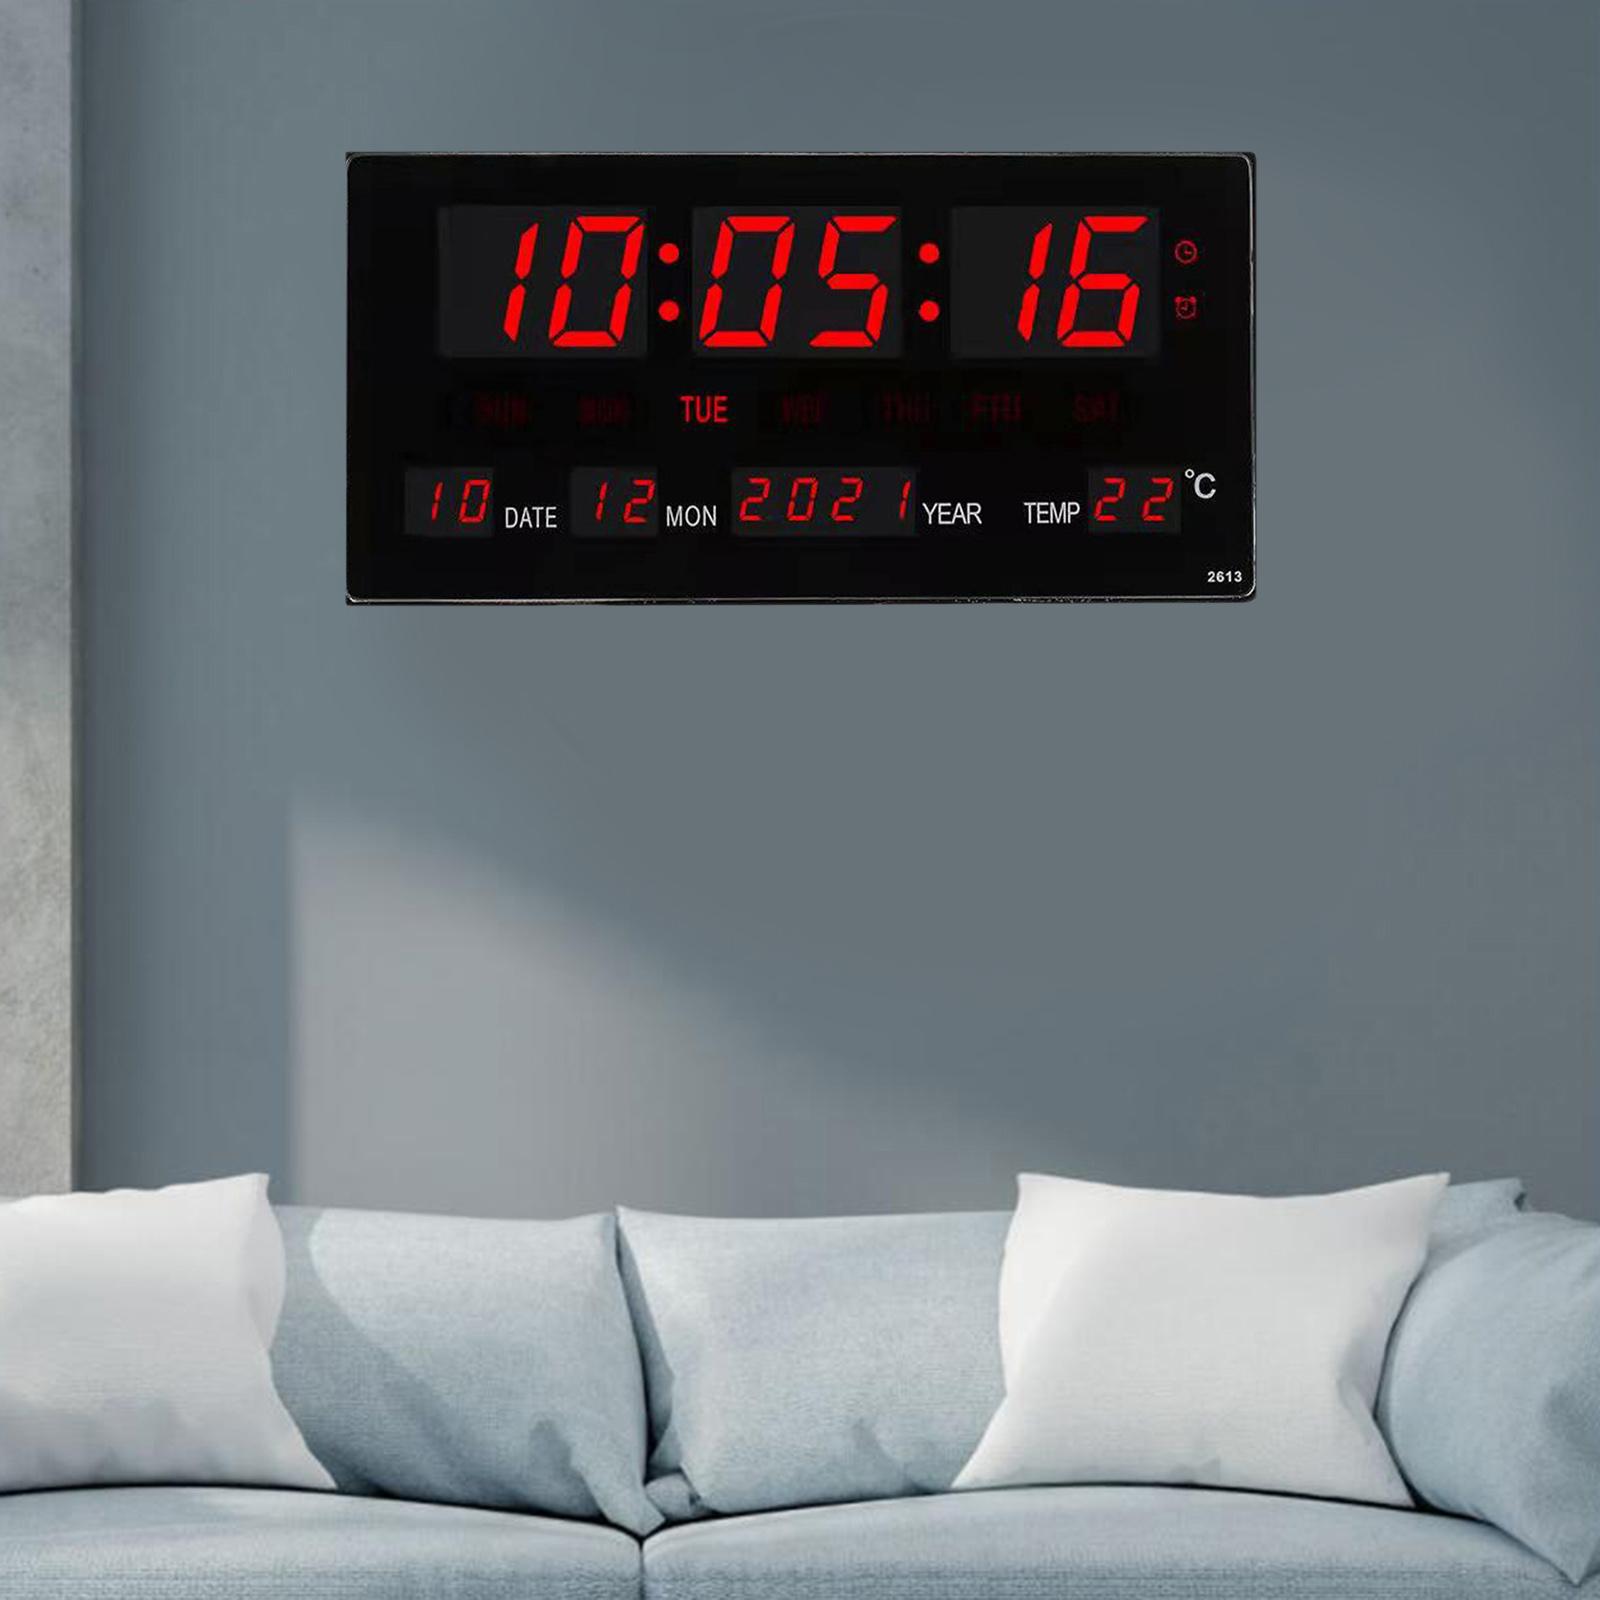 Large Screen Digital Wall Clock LED Display Home W/ Temperature Alarm Clocks